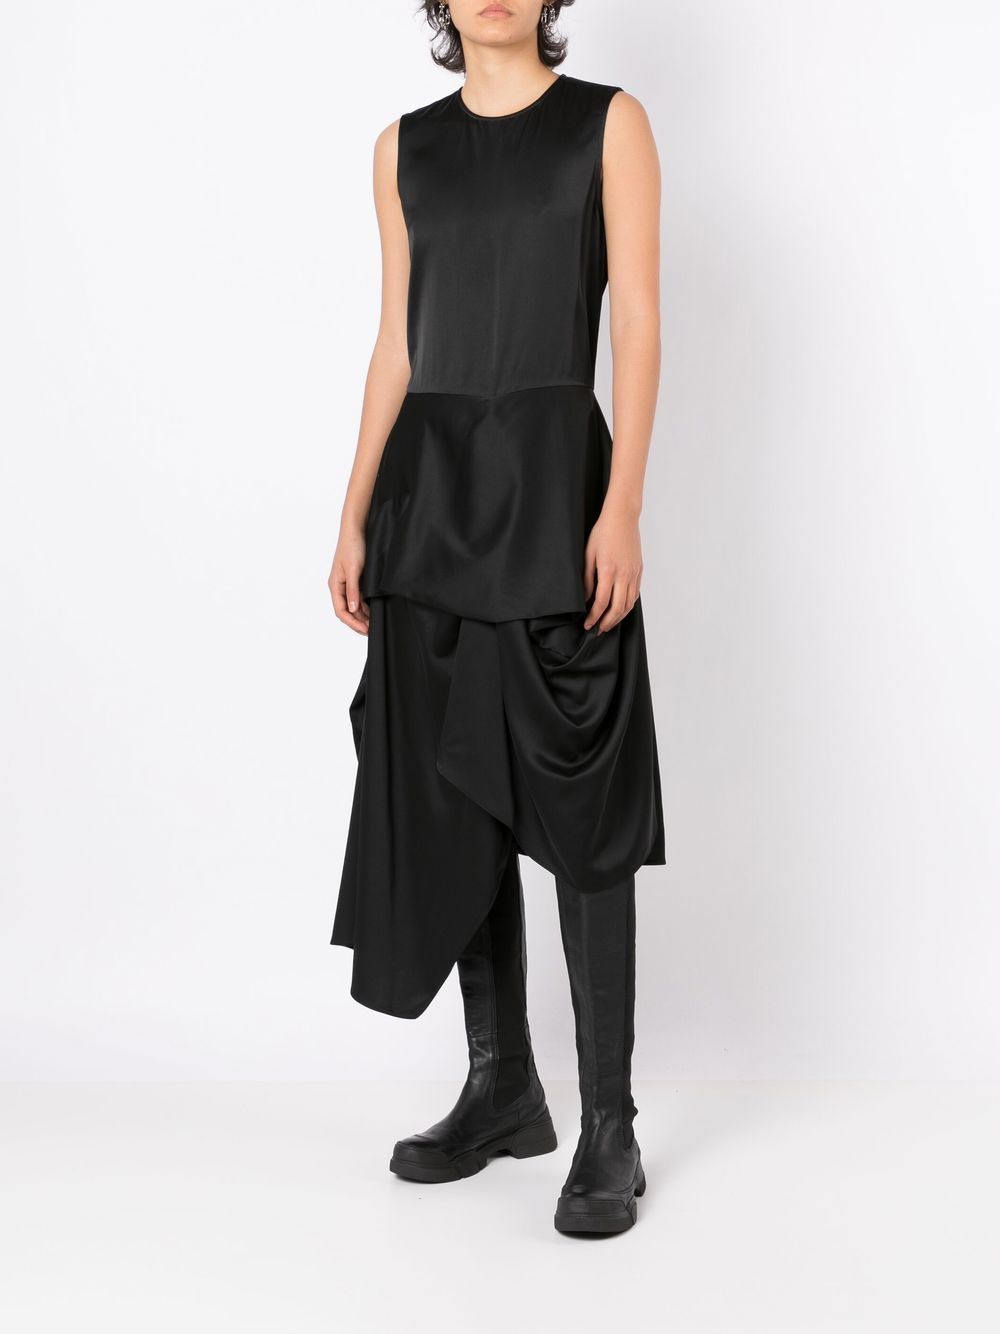 Uma | Raquel Davidowicz Gedrapeerde jurk - Zwart